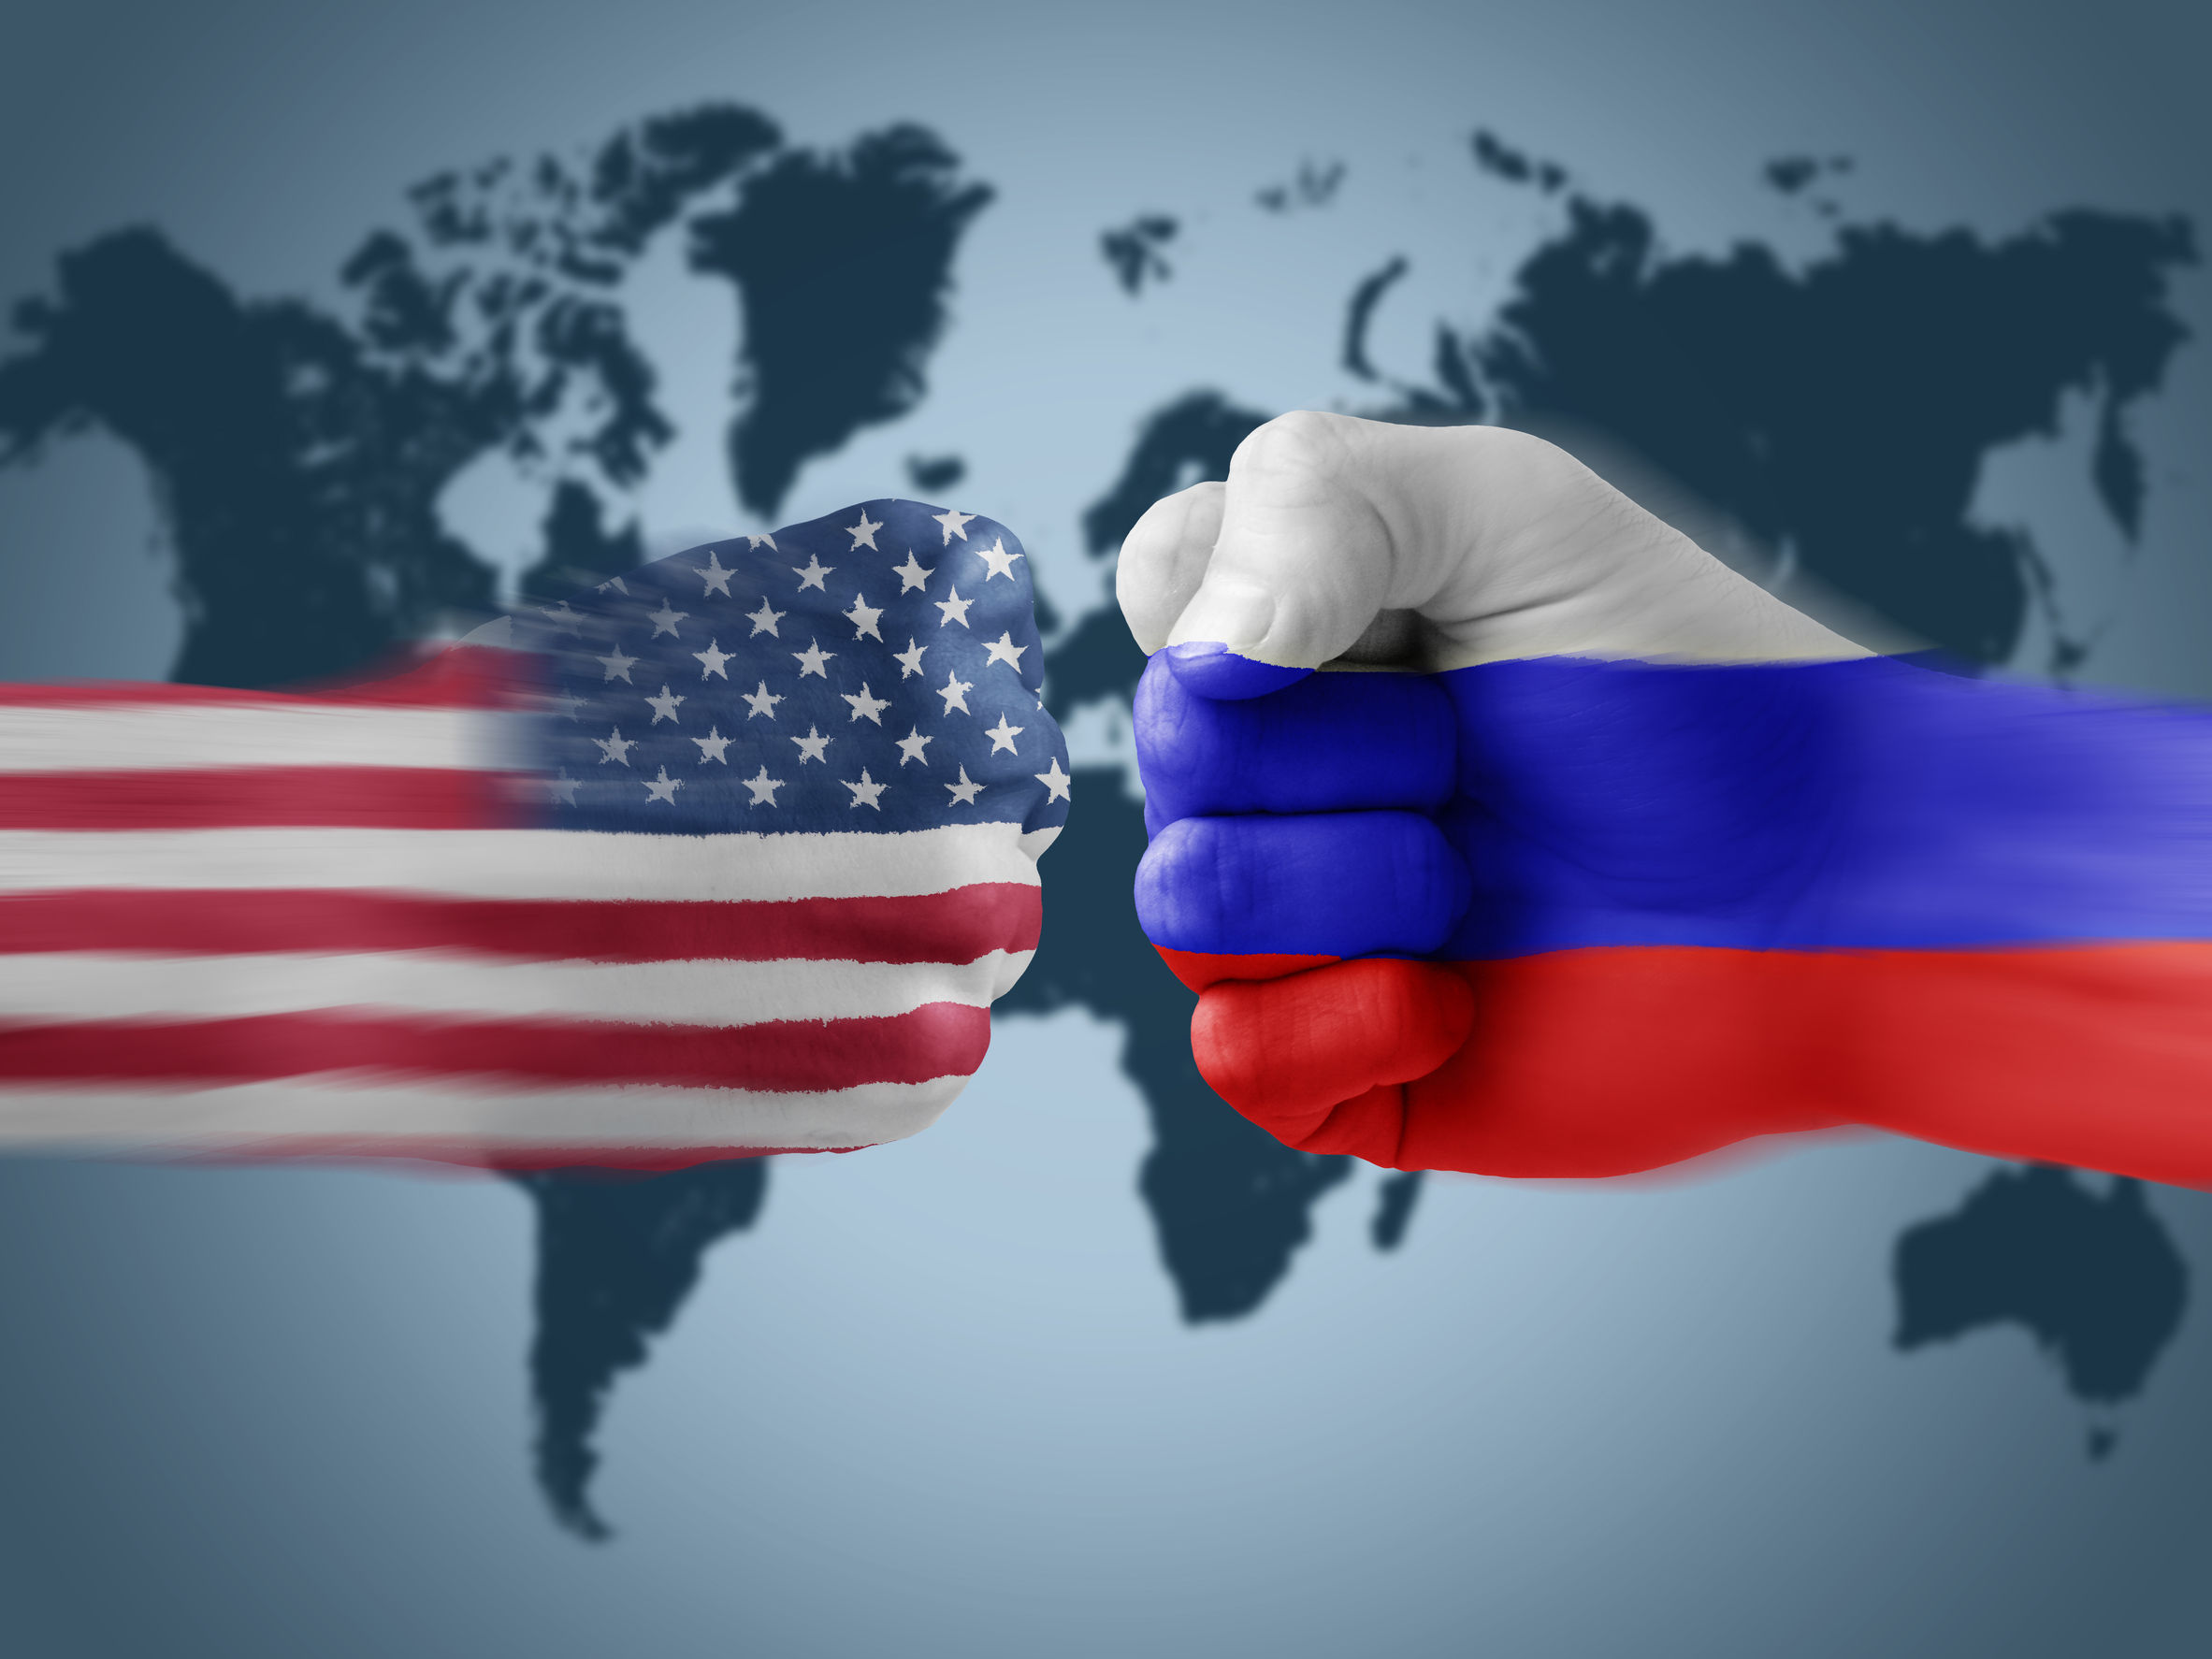 Covert Regime Change: America's Secret Cold War (Cornell Studies